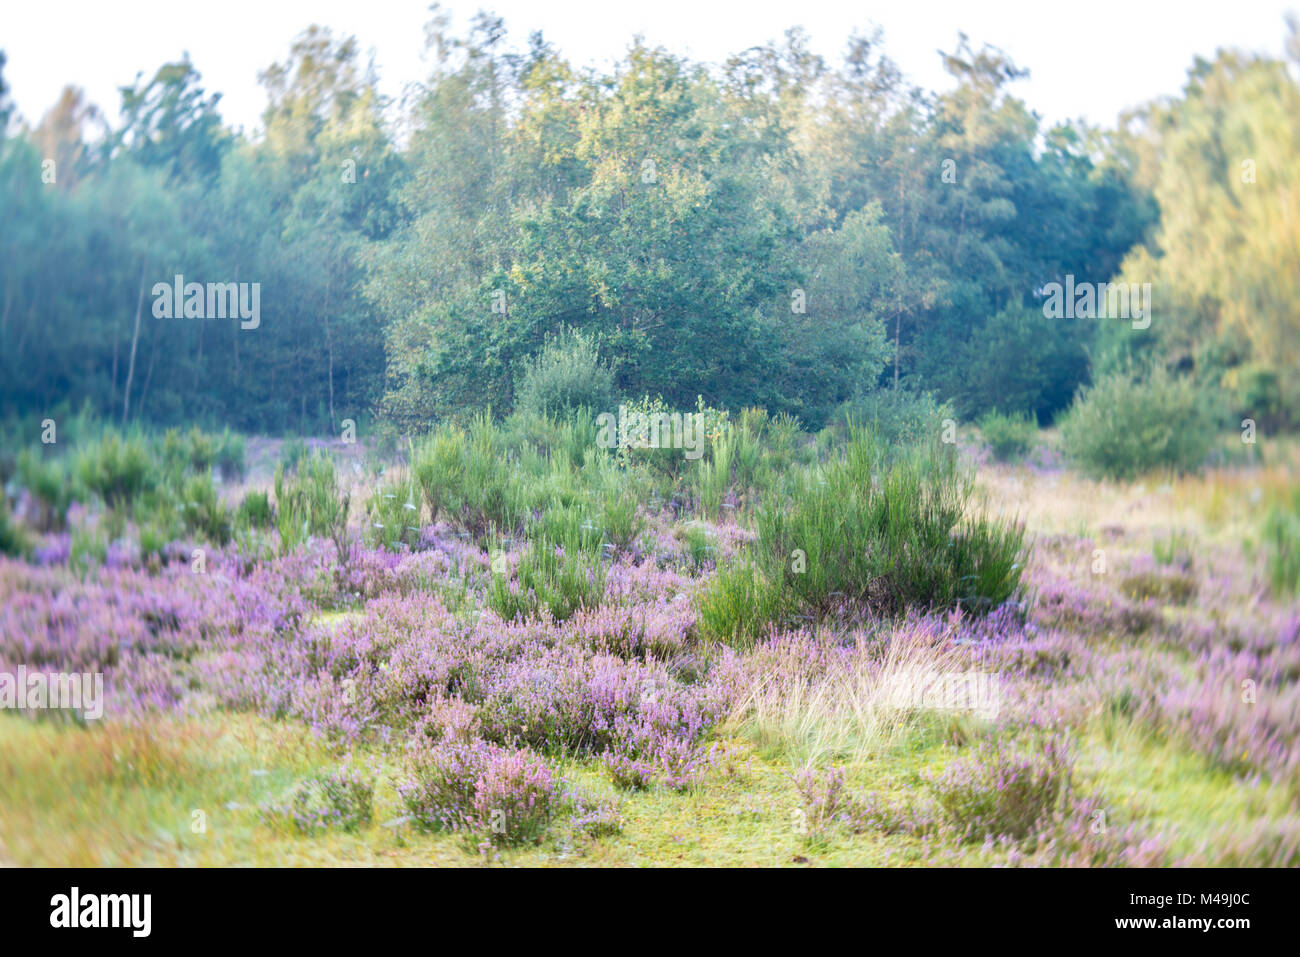 Autumn landscape with erica Stock Photo